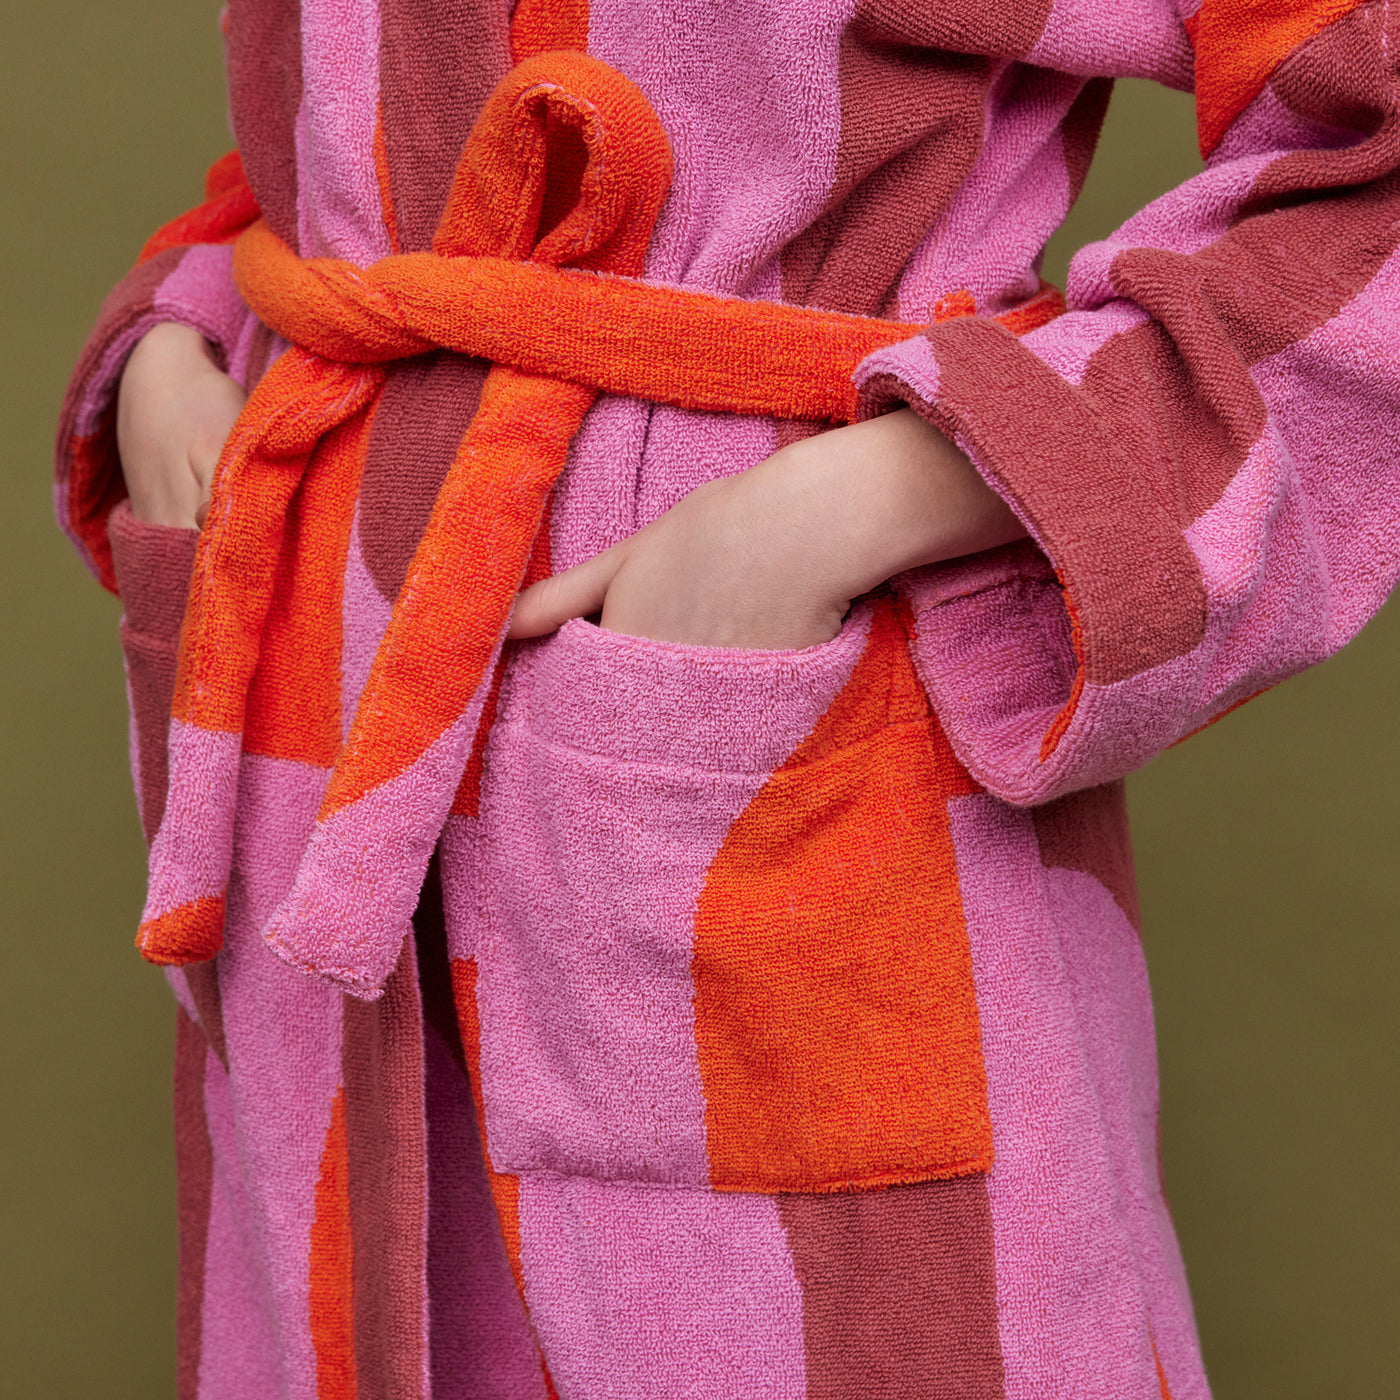 Redondo Towelling Robe - Dahlia XS/S